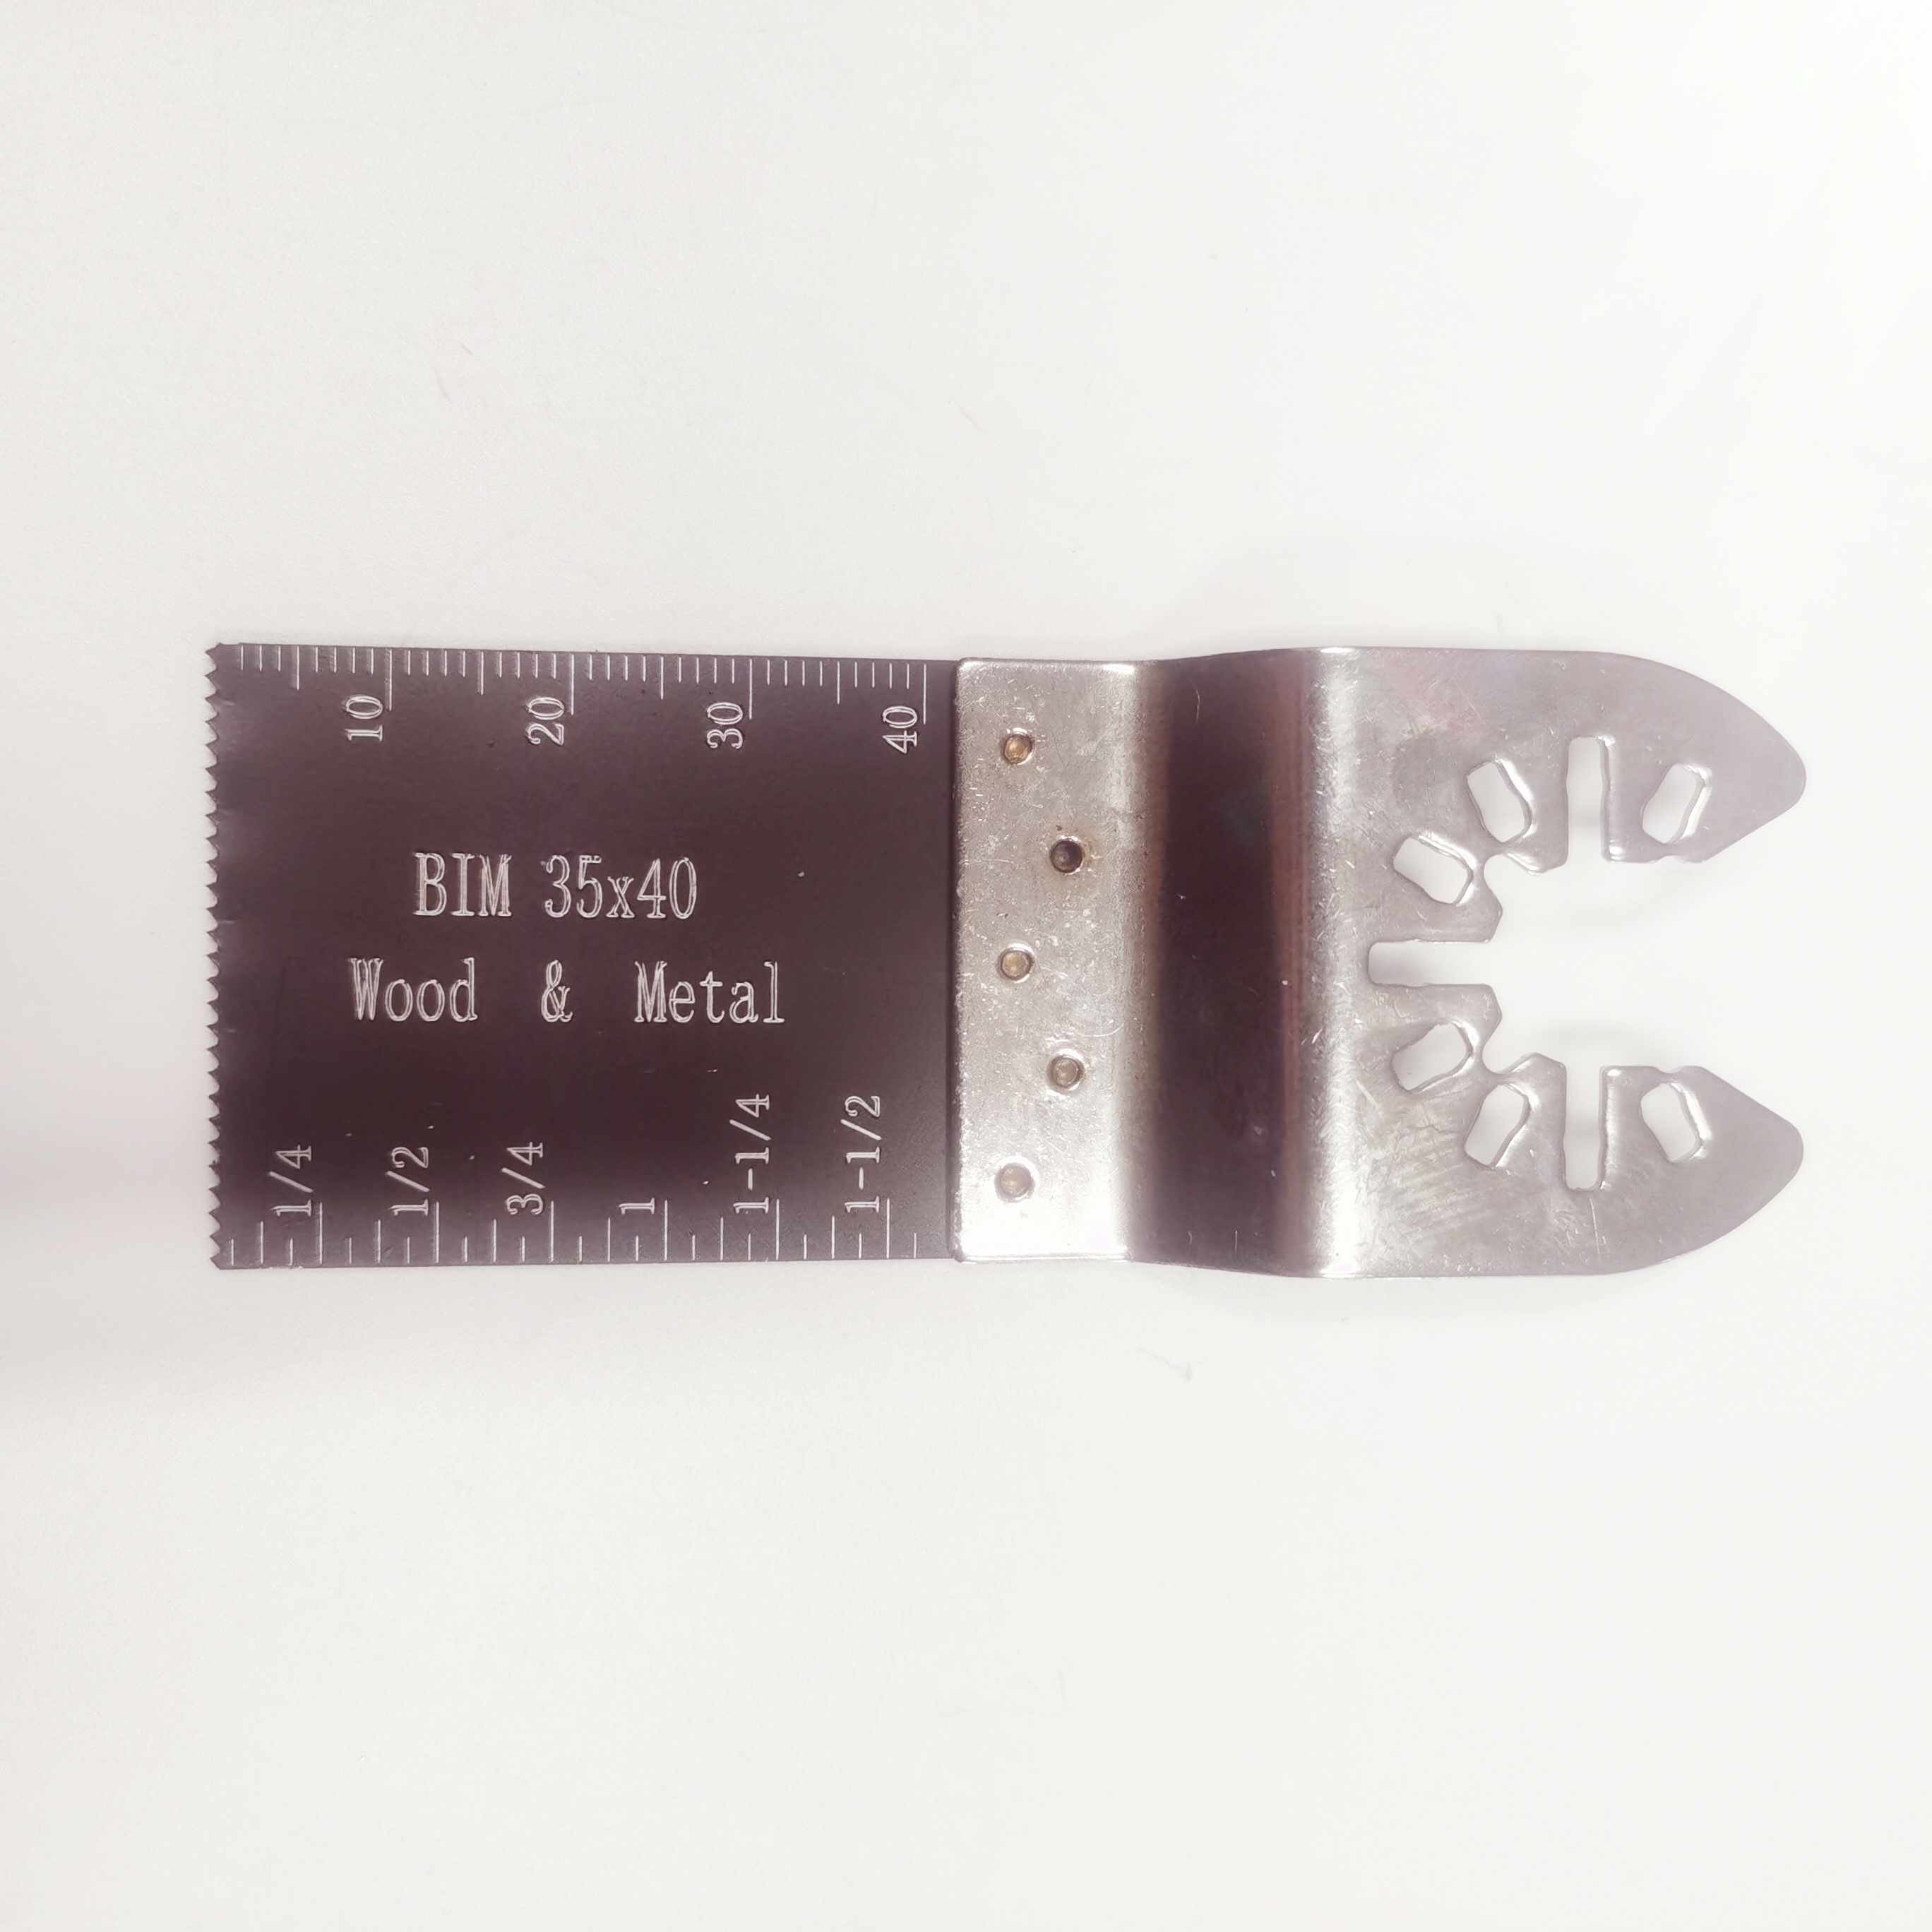 35x40mm BIM Oscillating Multi Tools Saw Blade for Wood Metal Nails